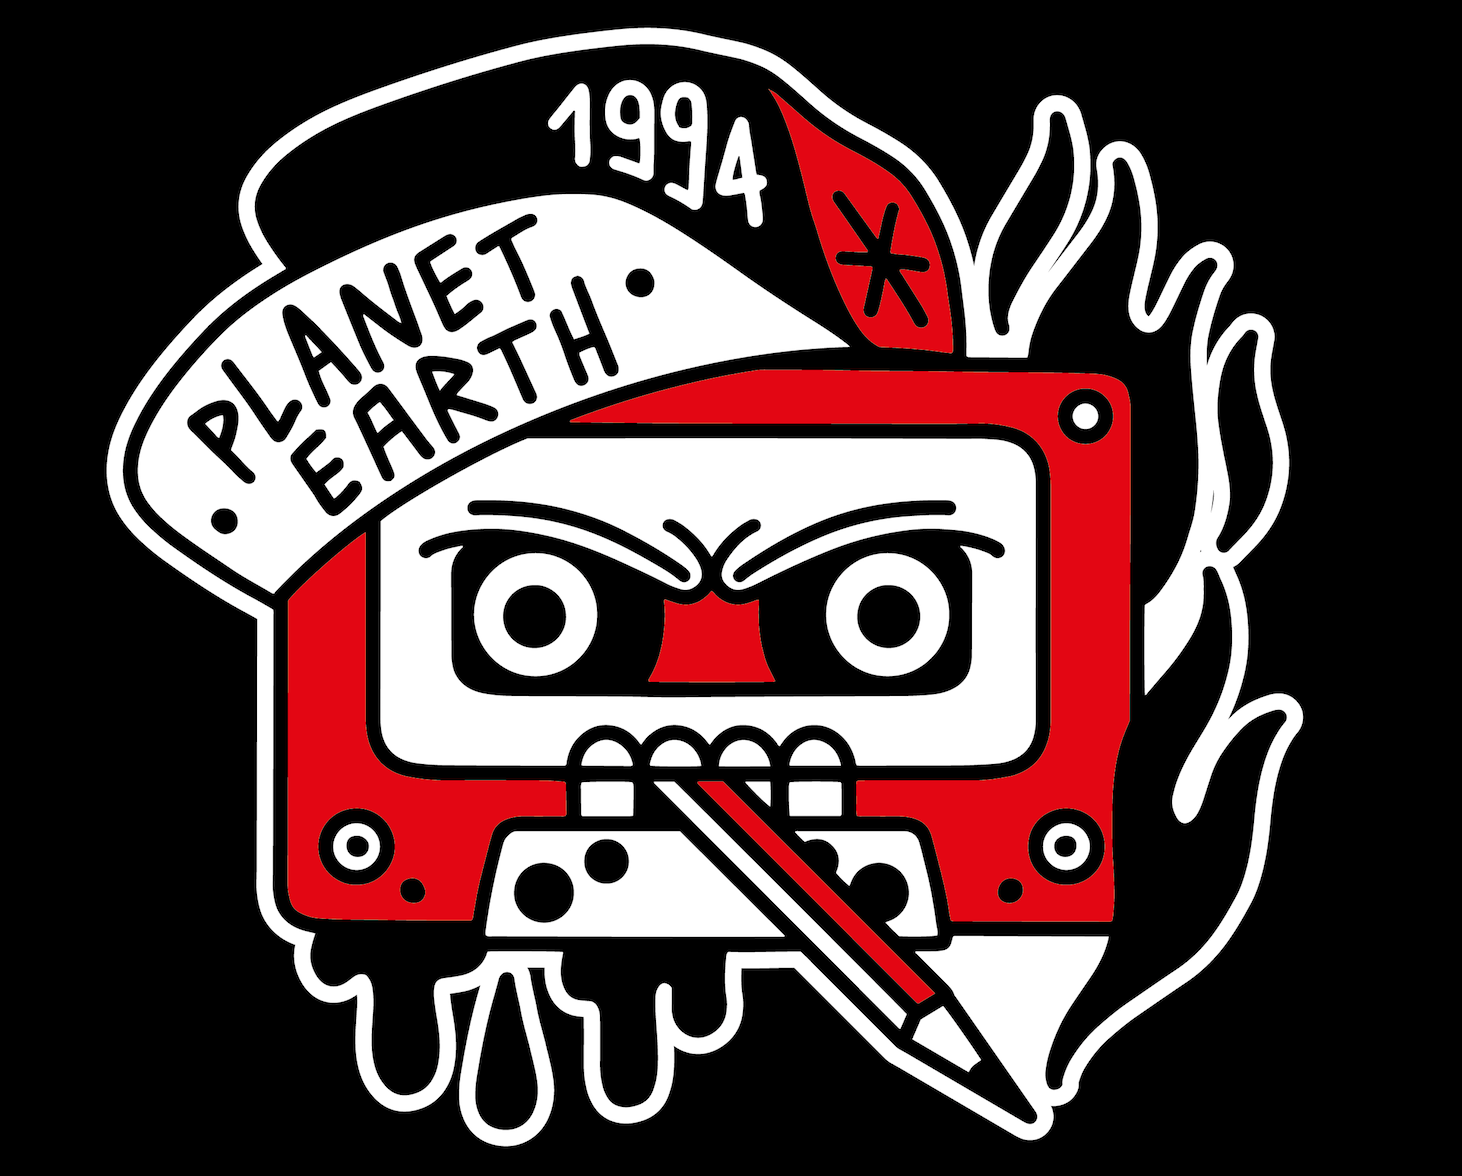 Planet Earth 1994